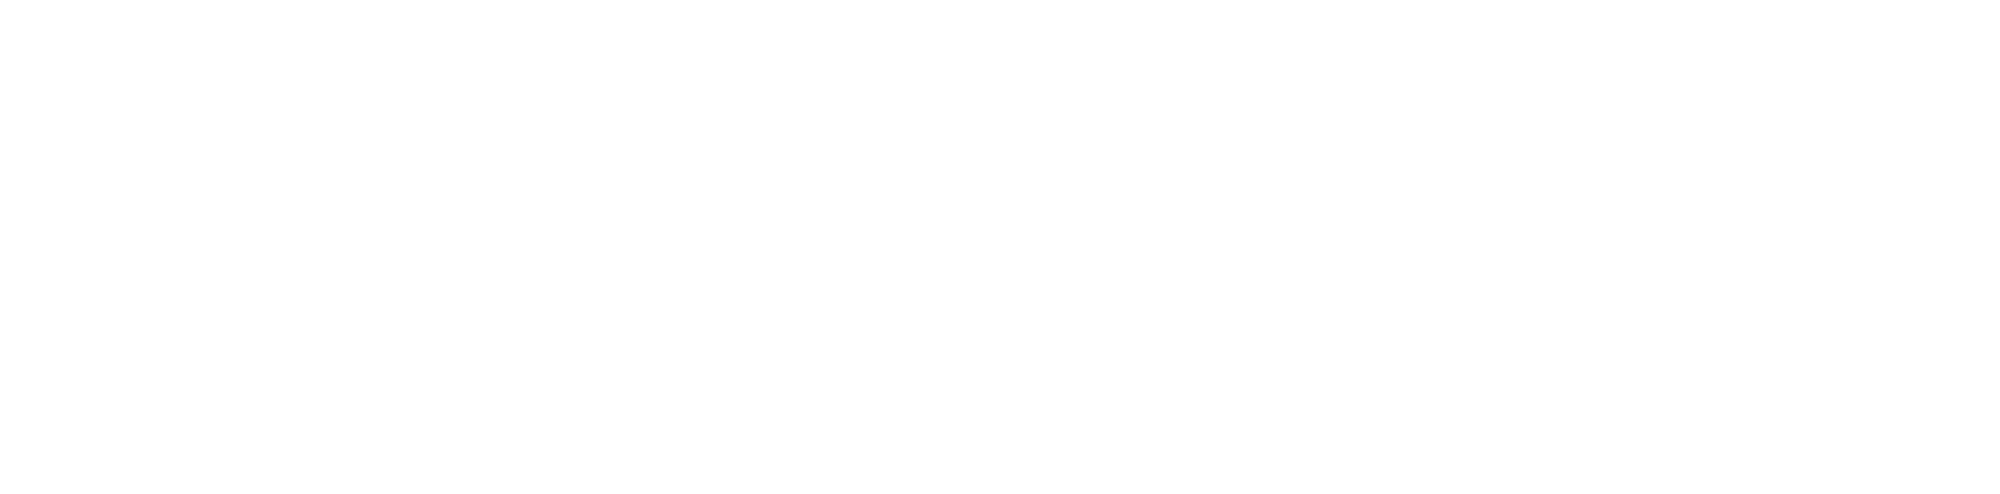 florida-investment-realty-white-logo